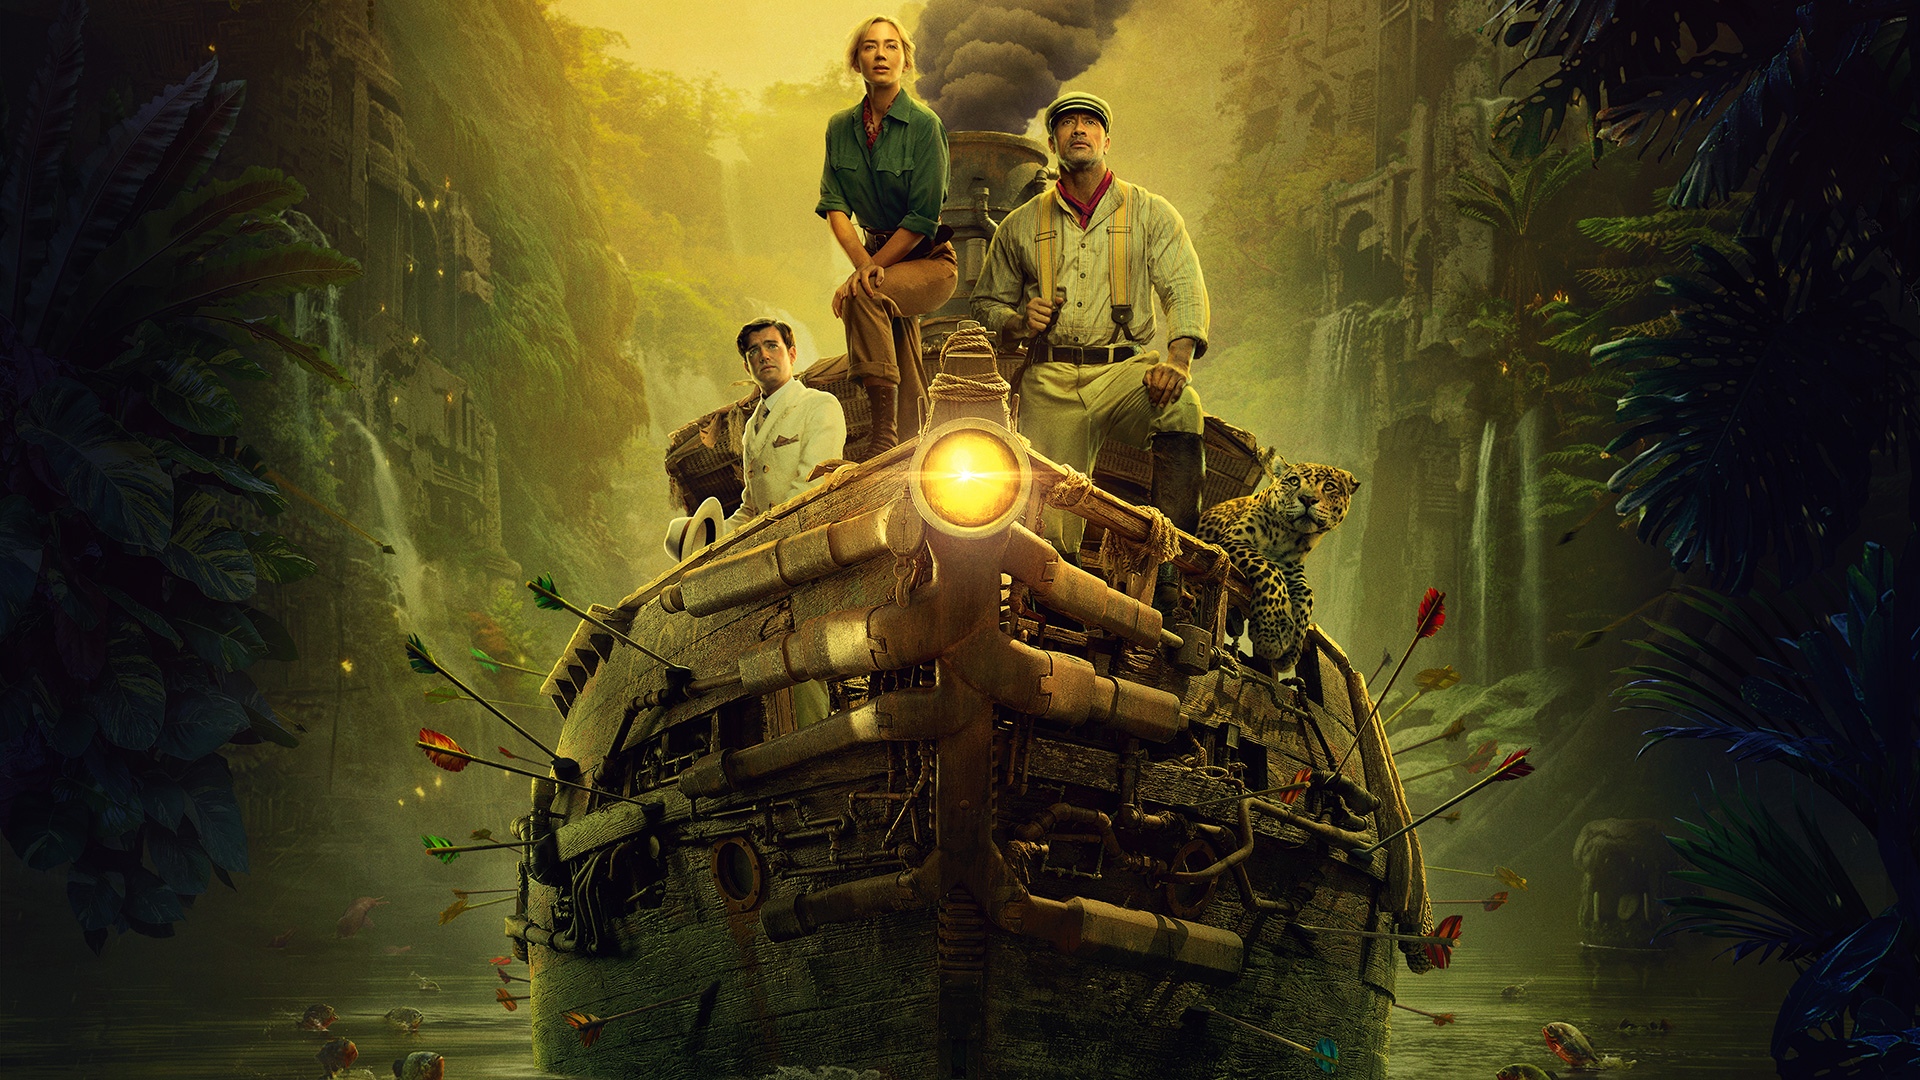 Movie Jungle Cruise HD Wallpaper | Background Image